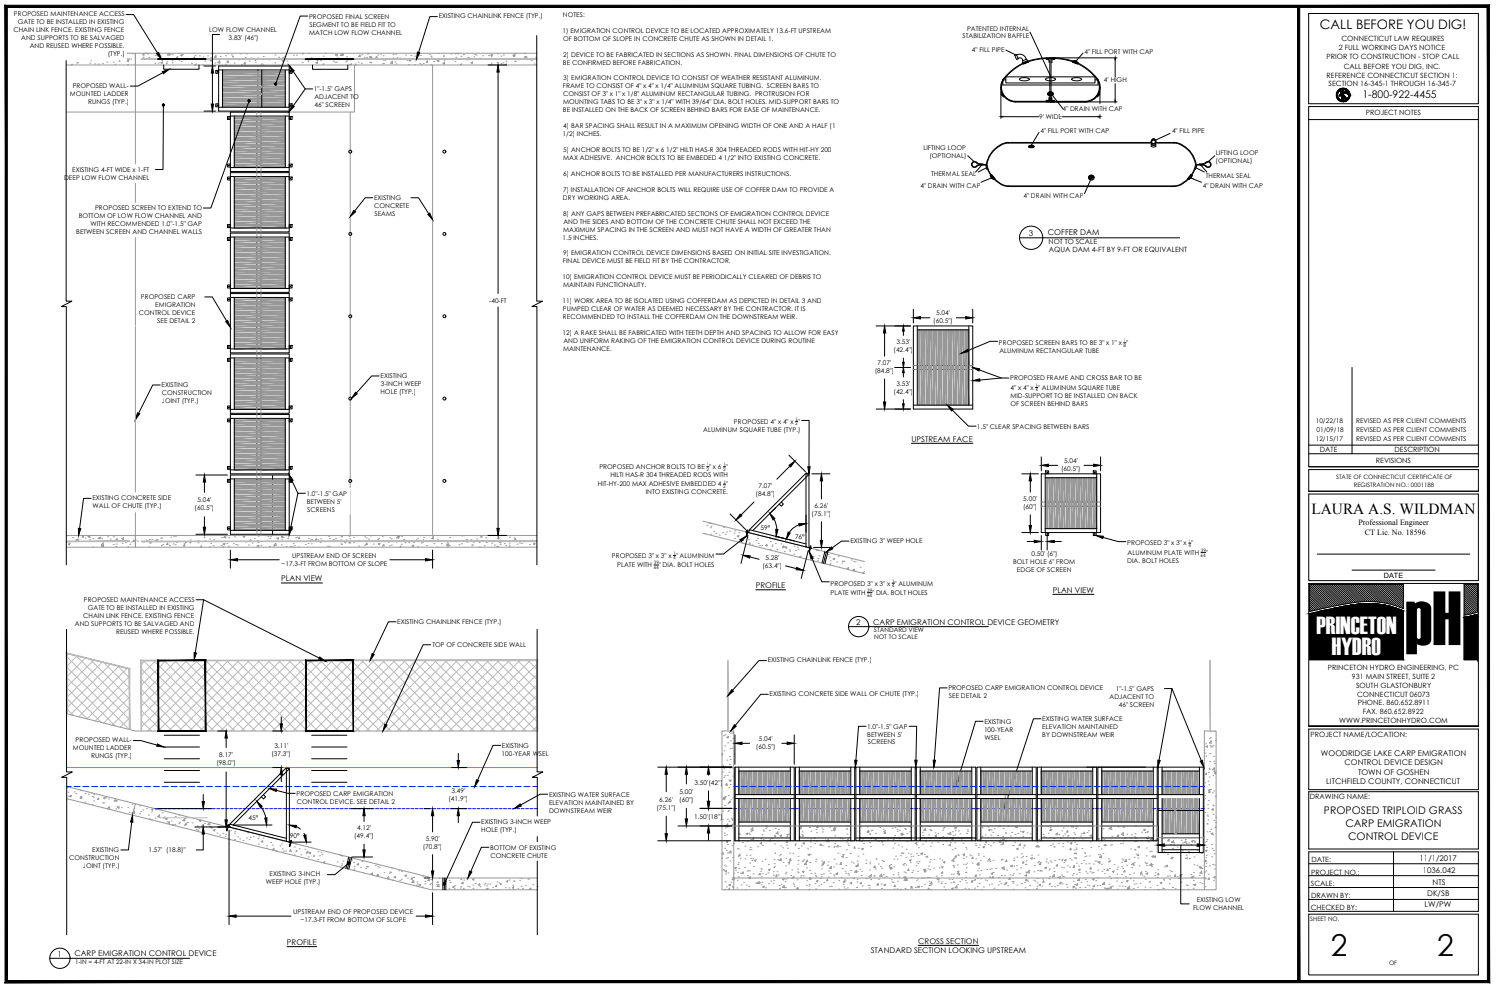 WOODRIDGE LAKE CARP EXCLUSION DEVICE DESIGN by Princeton Hydro